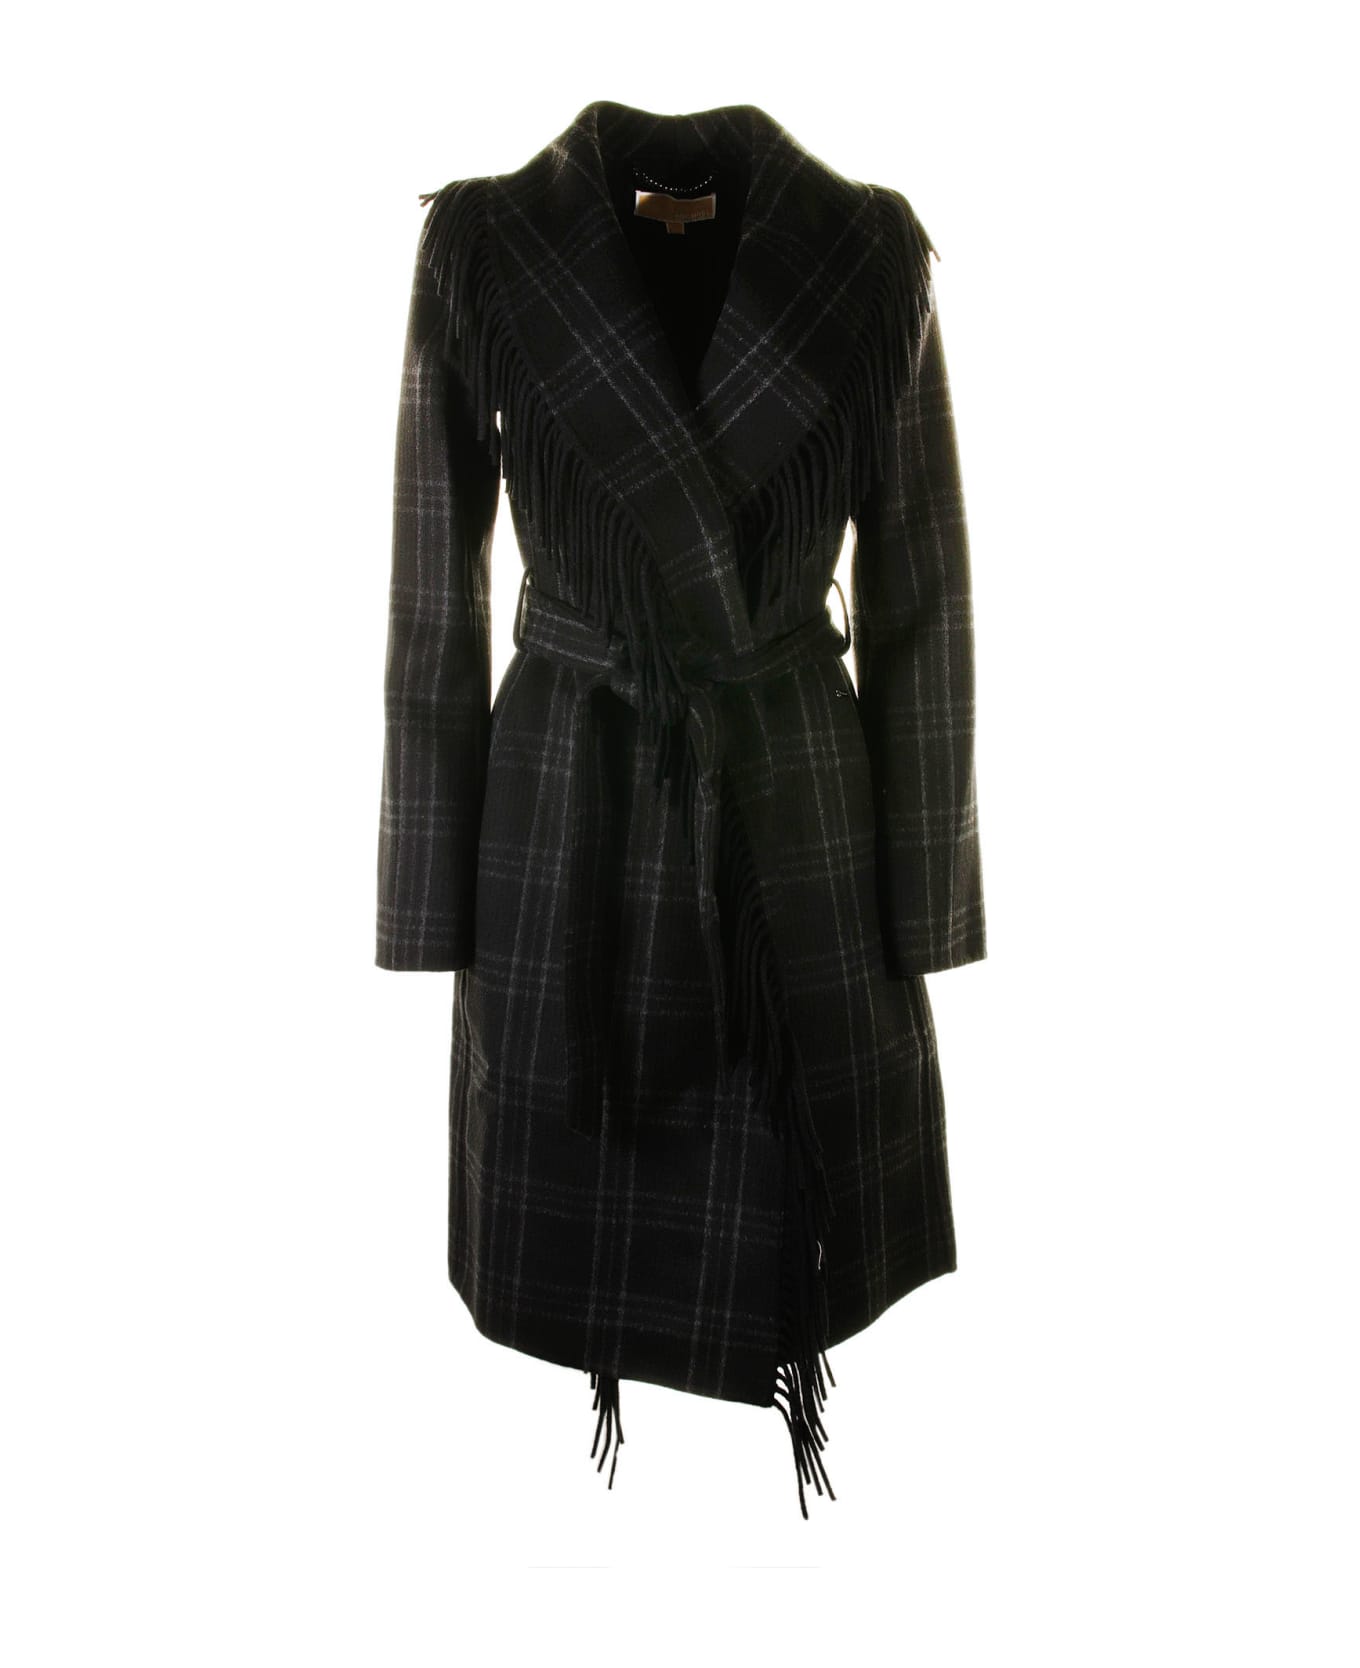 Michael Kors Wool Blend Coat With Belt And Fringes - BLACK PLAID